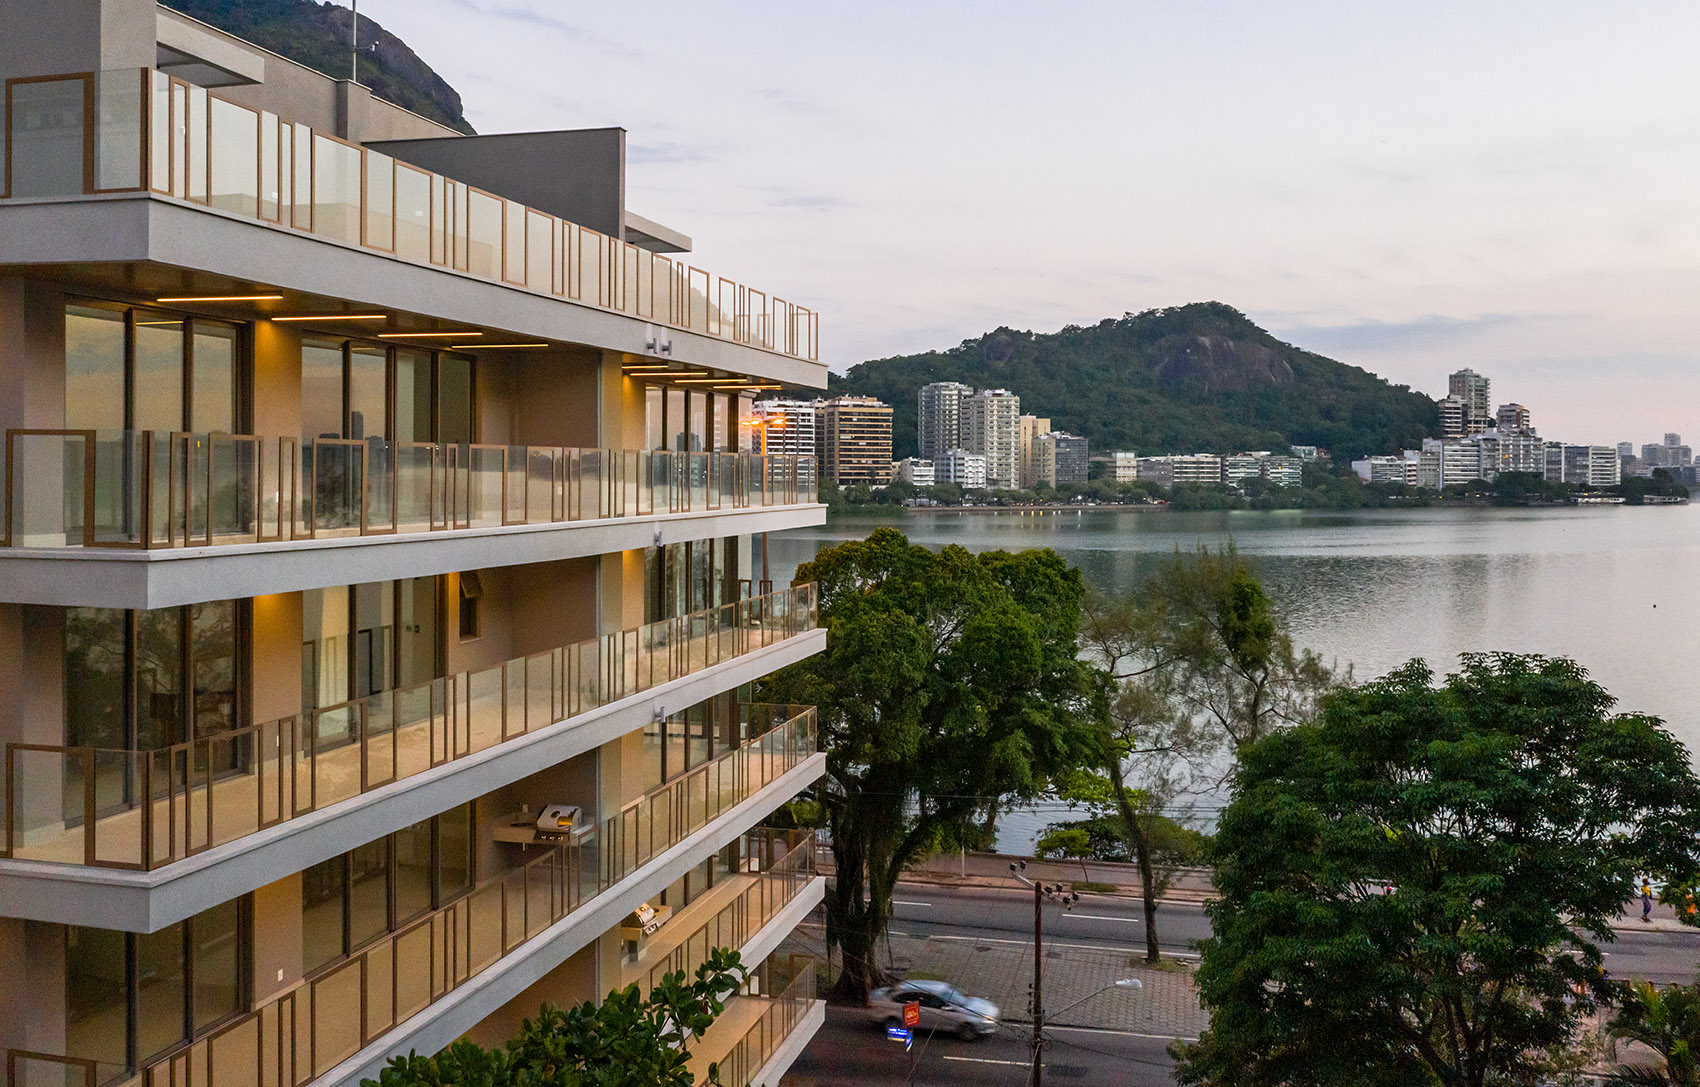 Borges 3647公寓楼，巴西/可以看到基督神像与泻湖景观的公寓楼-71